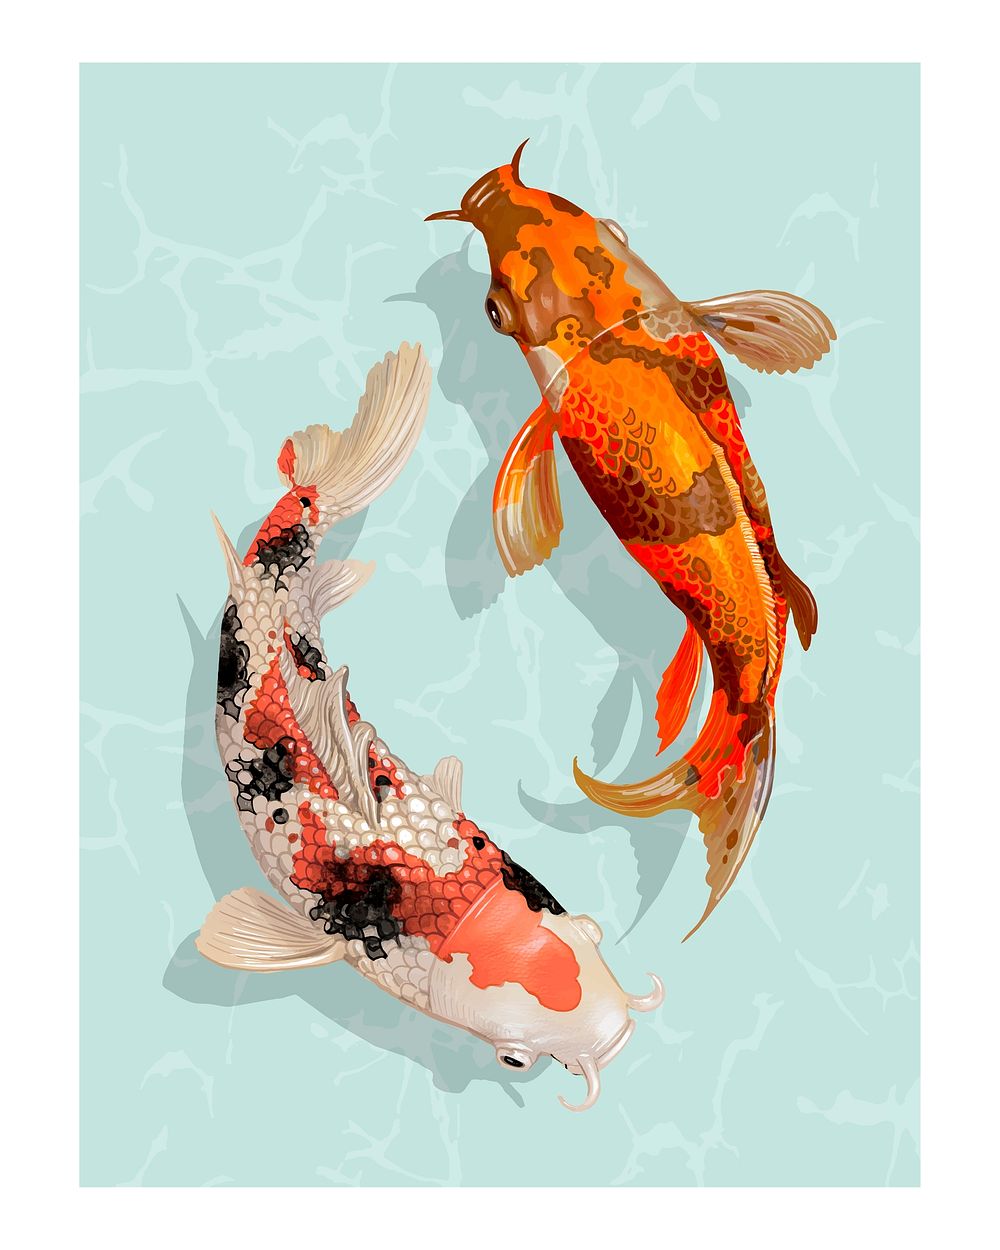 Two Japanese Koi fish swimming illustration wall art print and poster design.